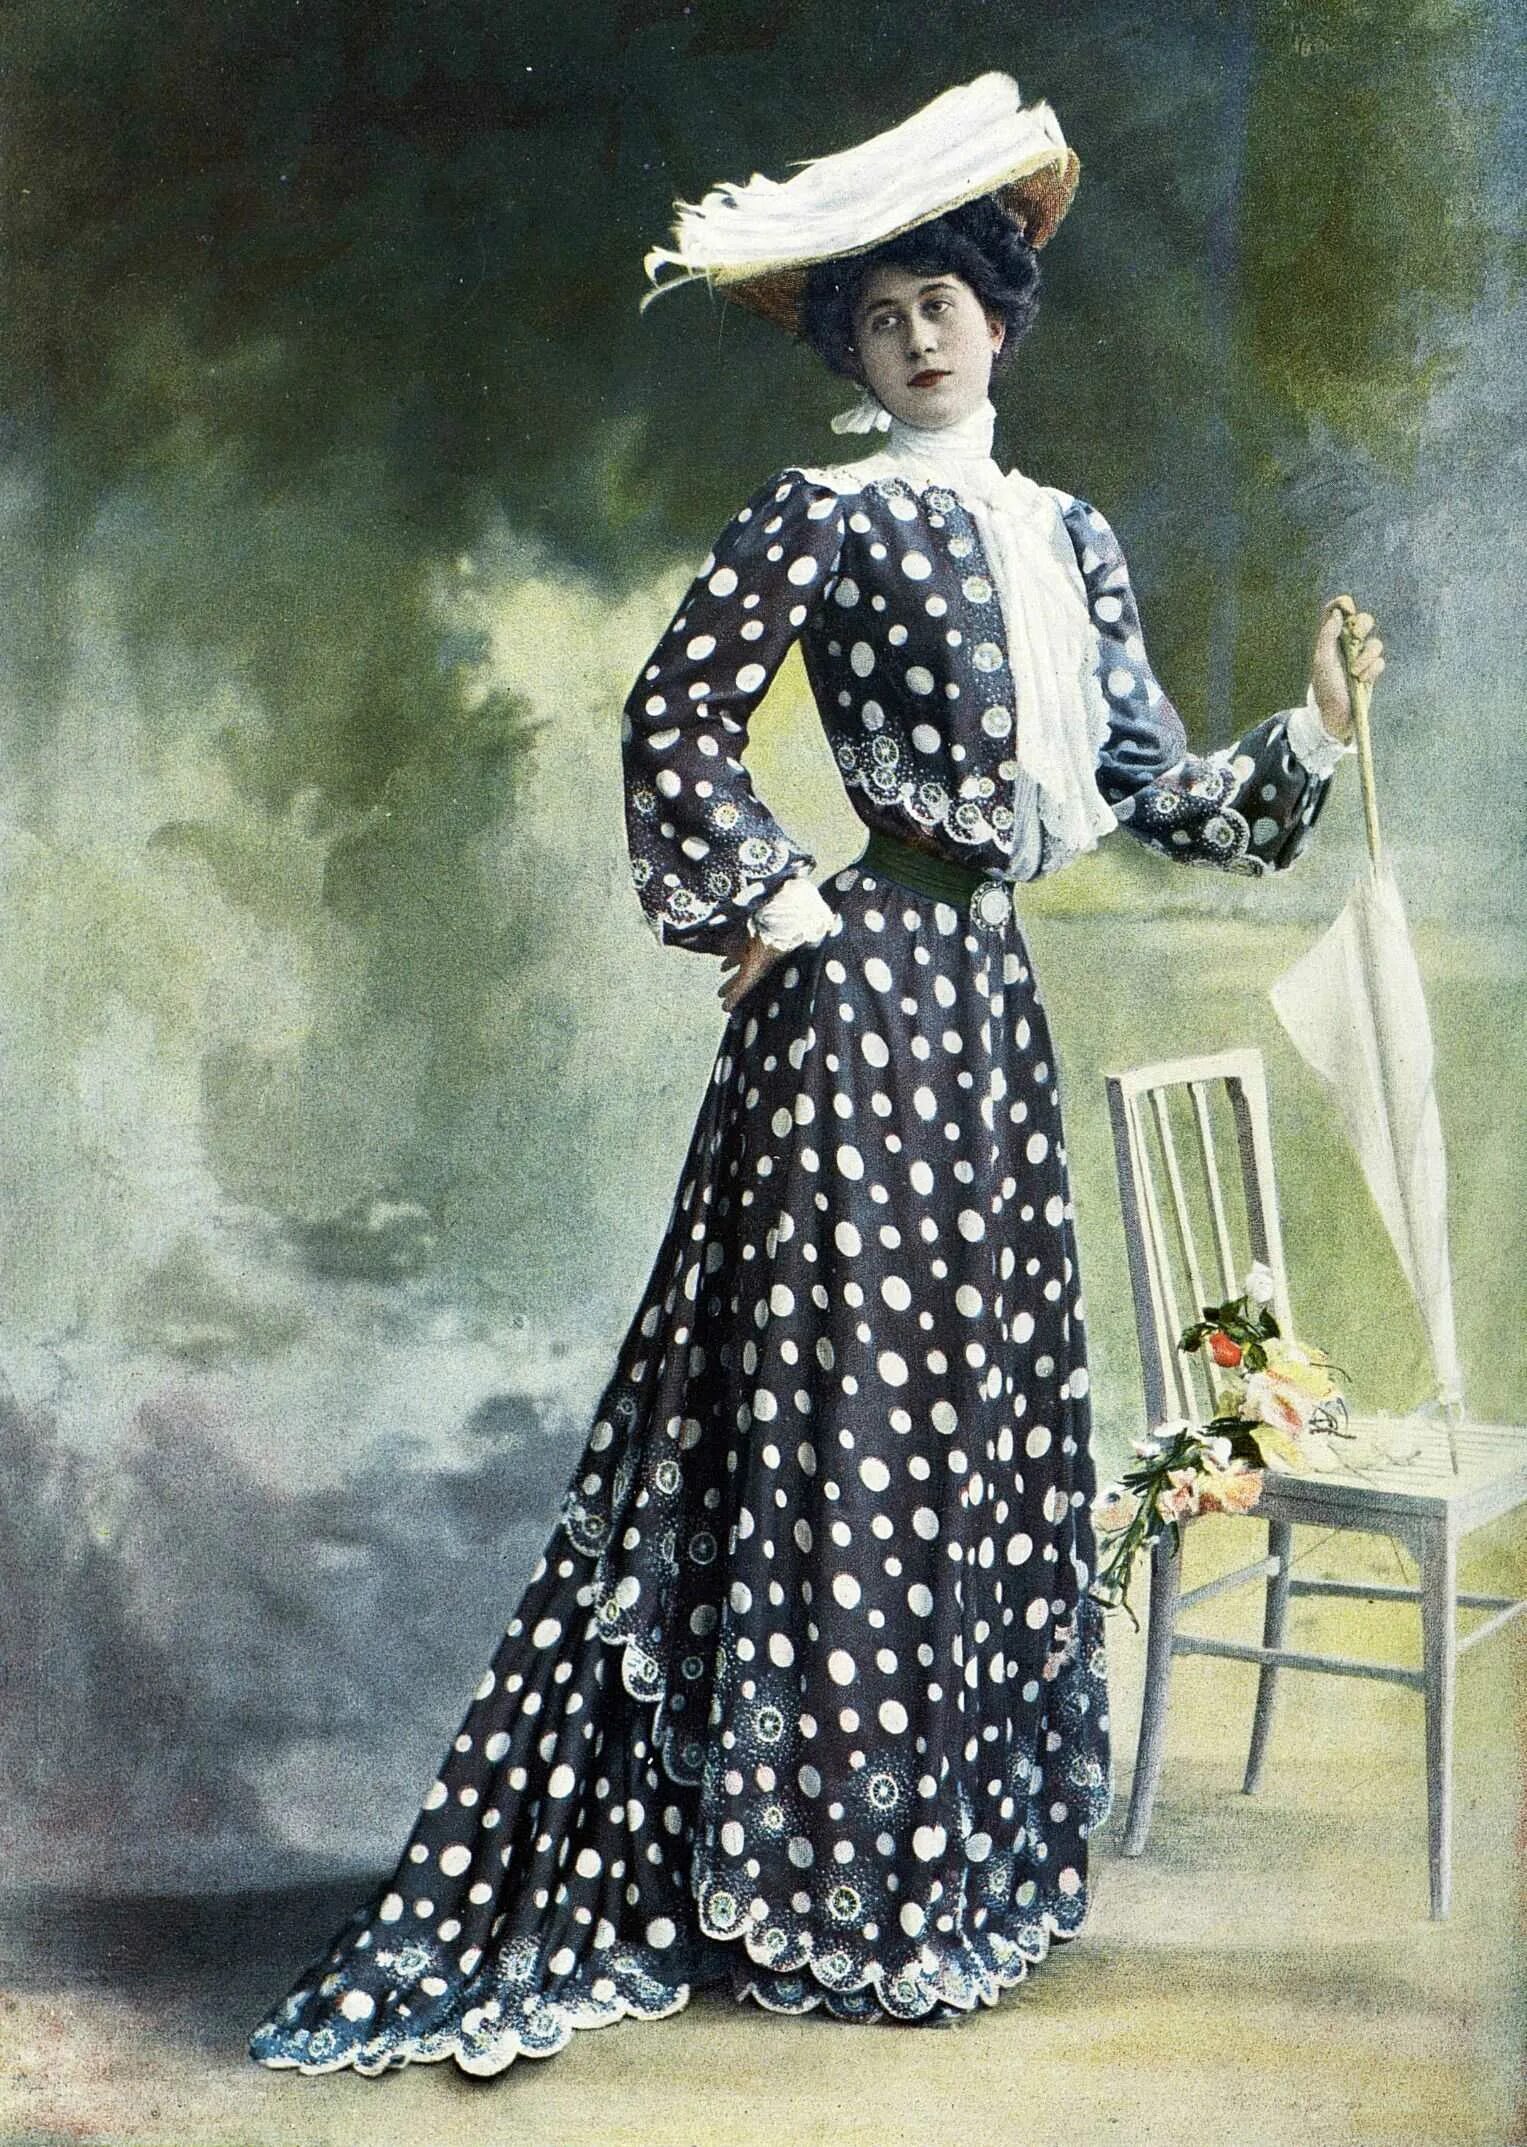 Мода Эдвардианская эпоха 1900. Эдвардианская эпоха (1901—1910) мода. Эдвардианская эпоха мода женская одежда. Винтаж Edwardian Dress.